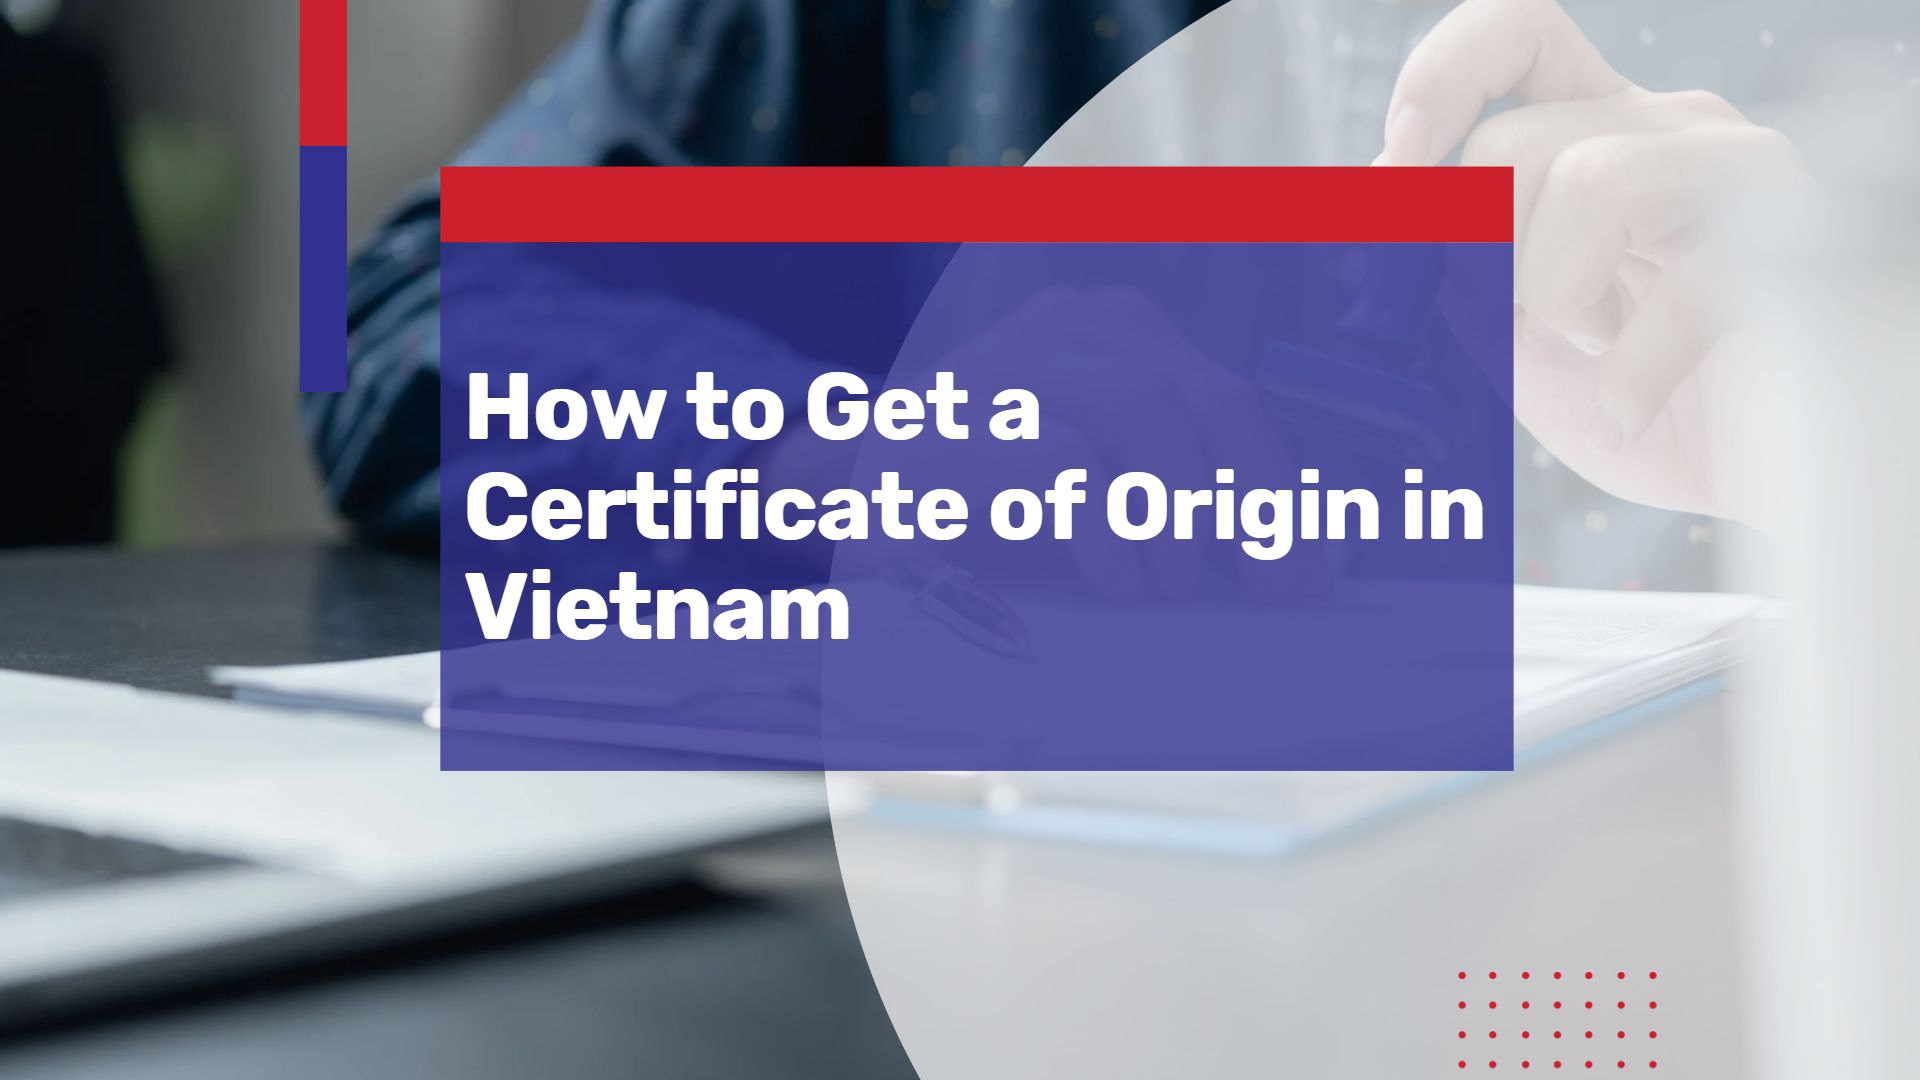 Certificate of Origin Vietnam: A Handy Guide to Help You Get It